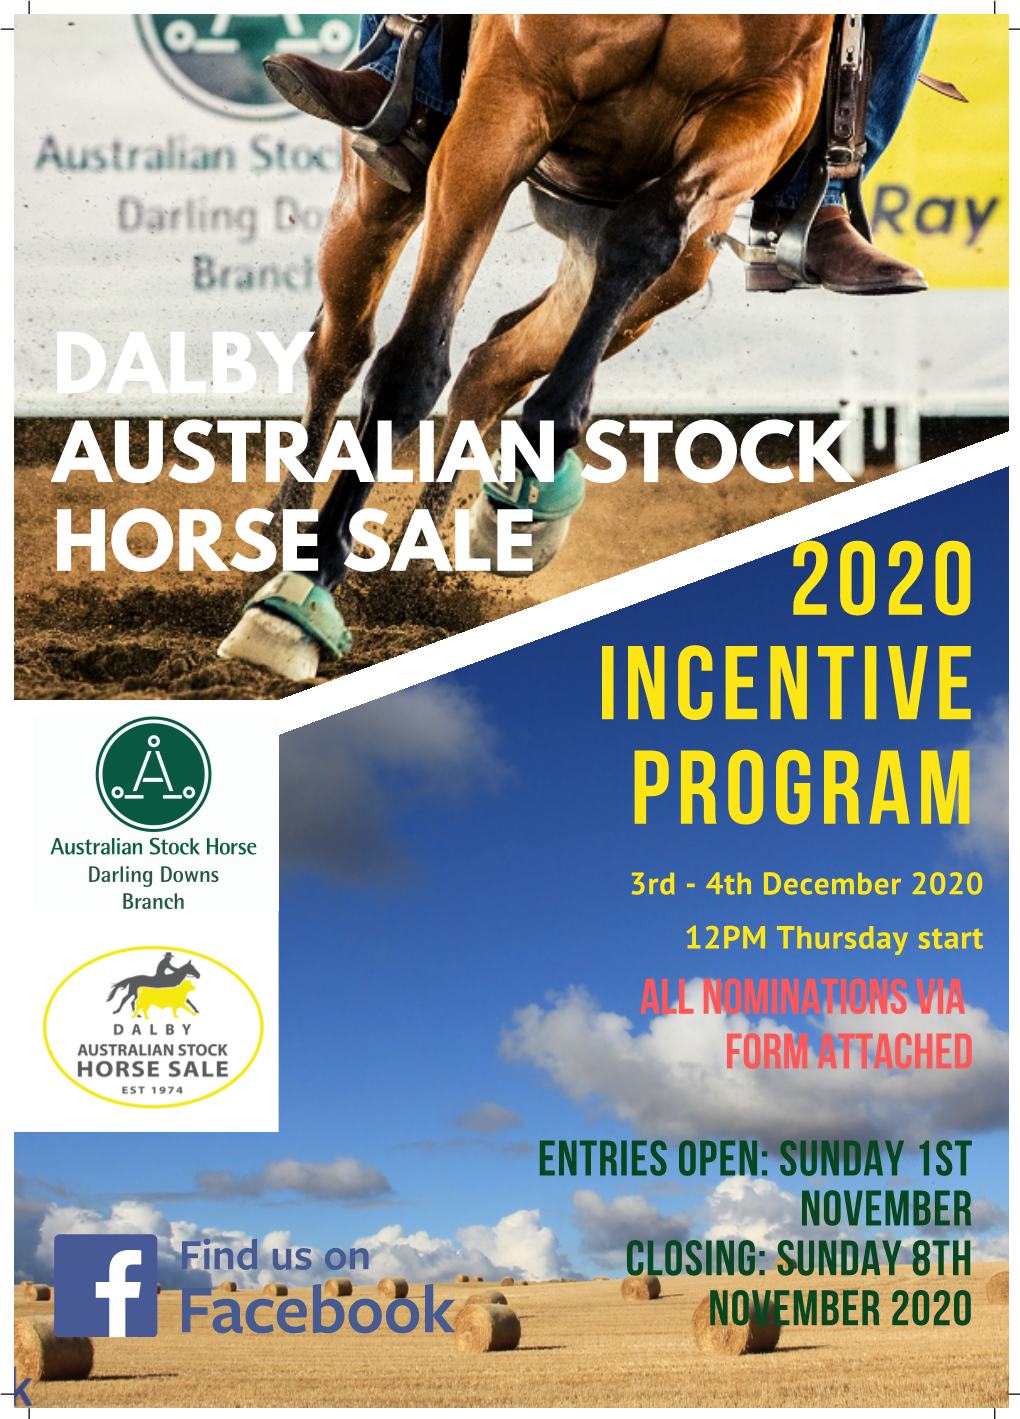 Dalby Australian Stock Horse Sale 2020 Incentive Program